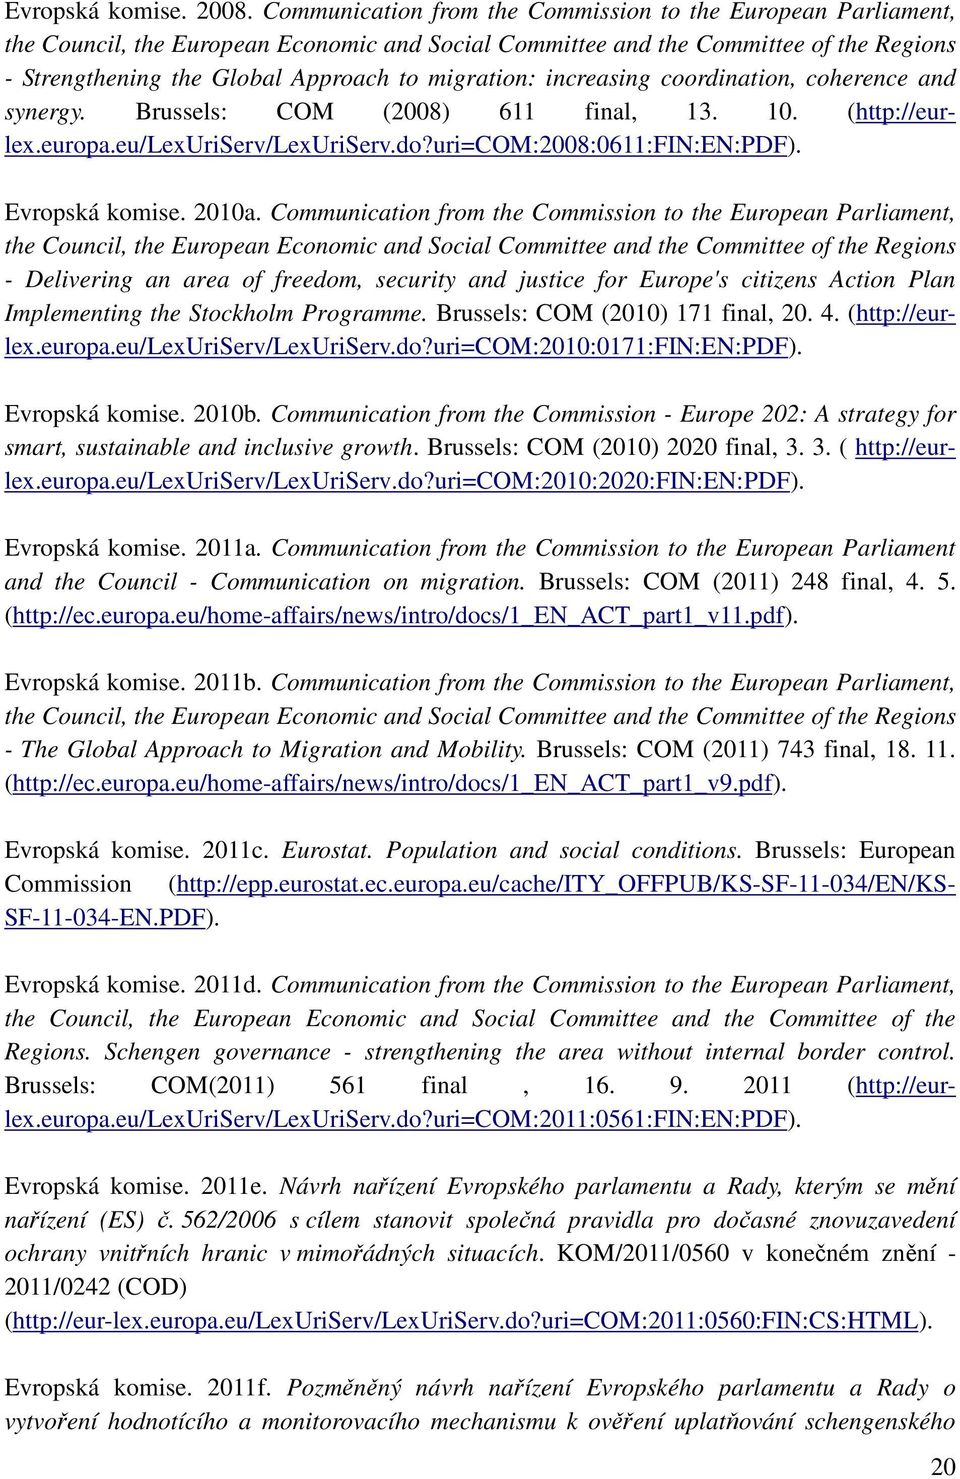 migration: increasing coordination, coherence and synergy. Brussels: COM (2008) 611 final, 13. 10. (http://eurlex.europa.eu/lexuriserv/lexuriserv.do?uri=com:2008:0611:fin:en:pdf). Evropská komise.